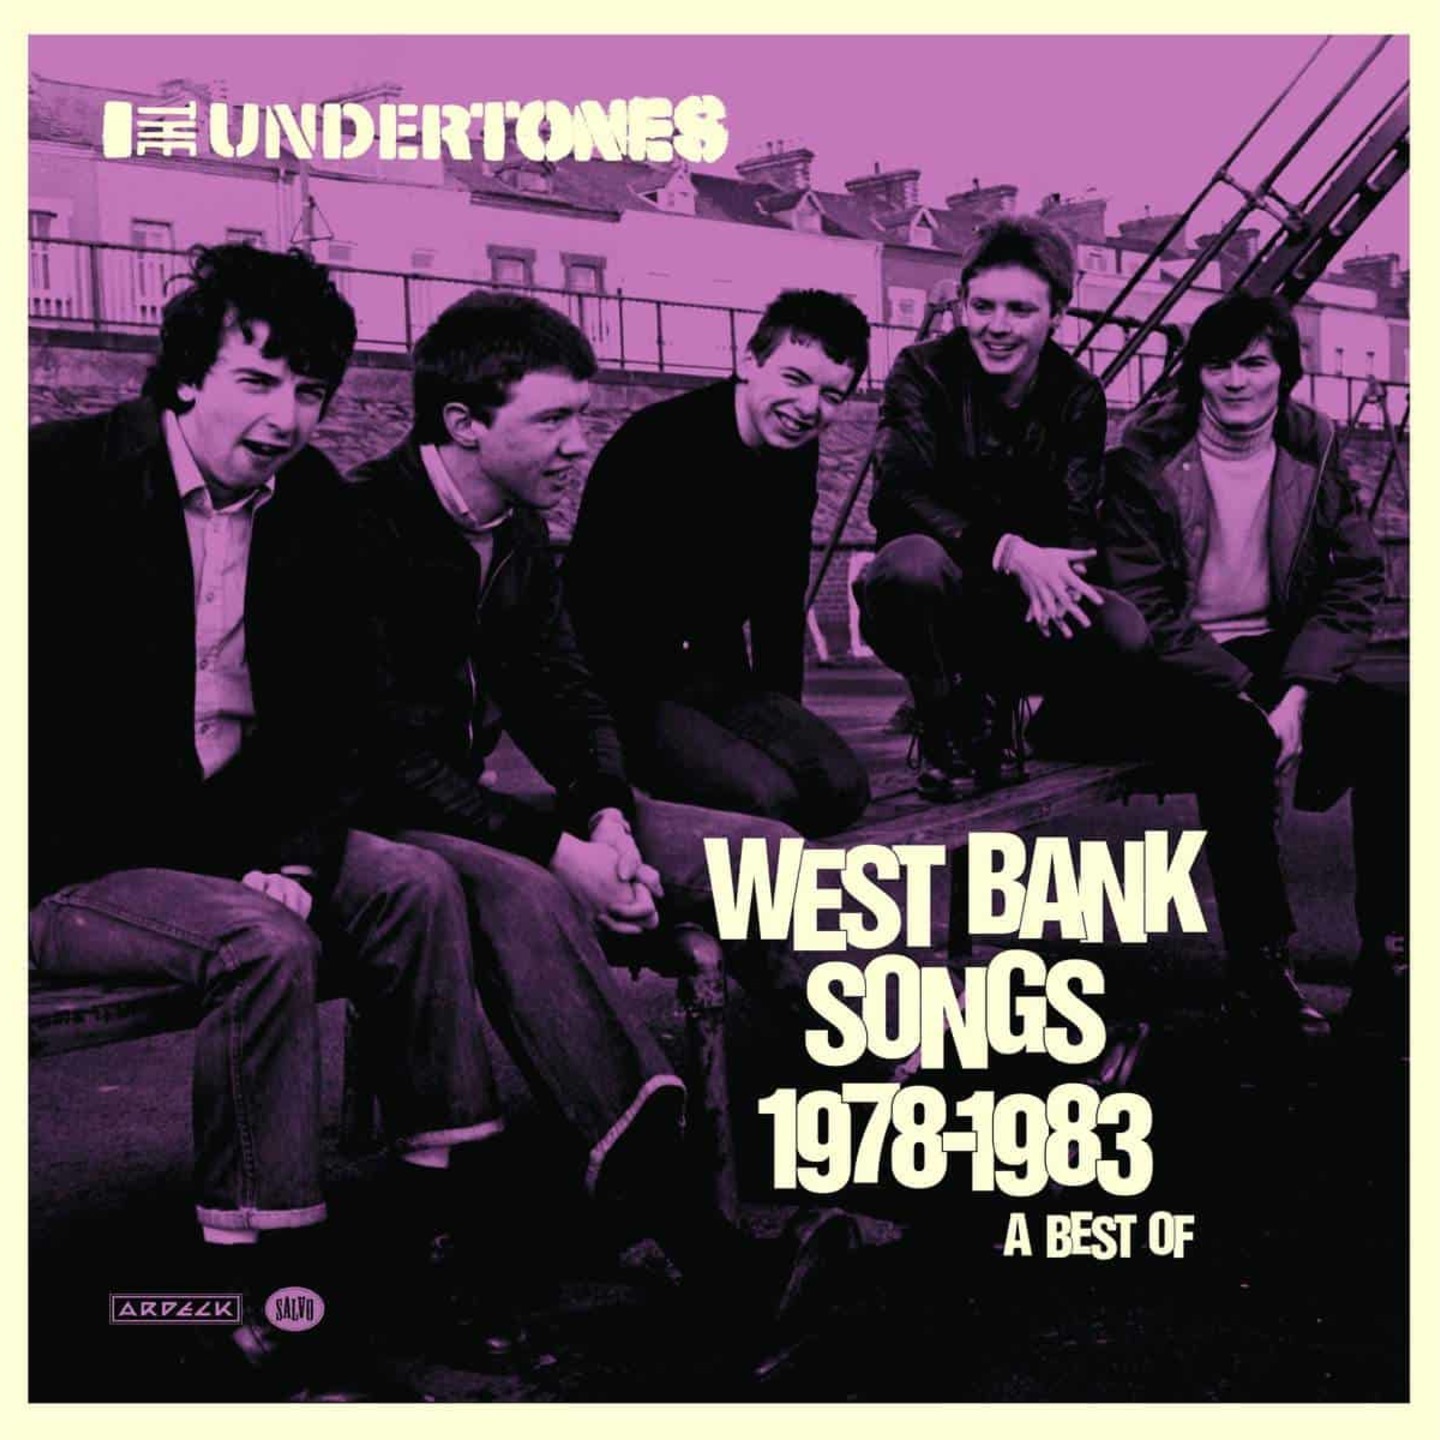 UNDERTONES, THE - West Bank Songs 1978-1983 A Best Of Clear Purple & White vinyl